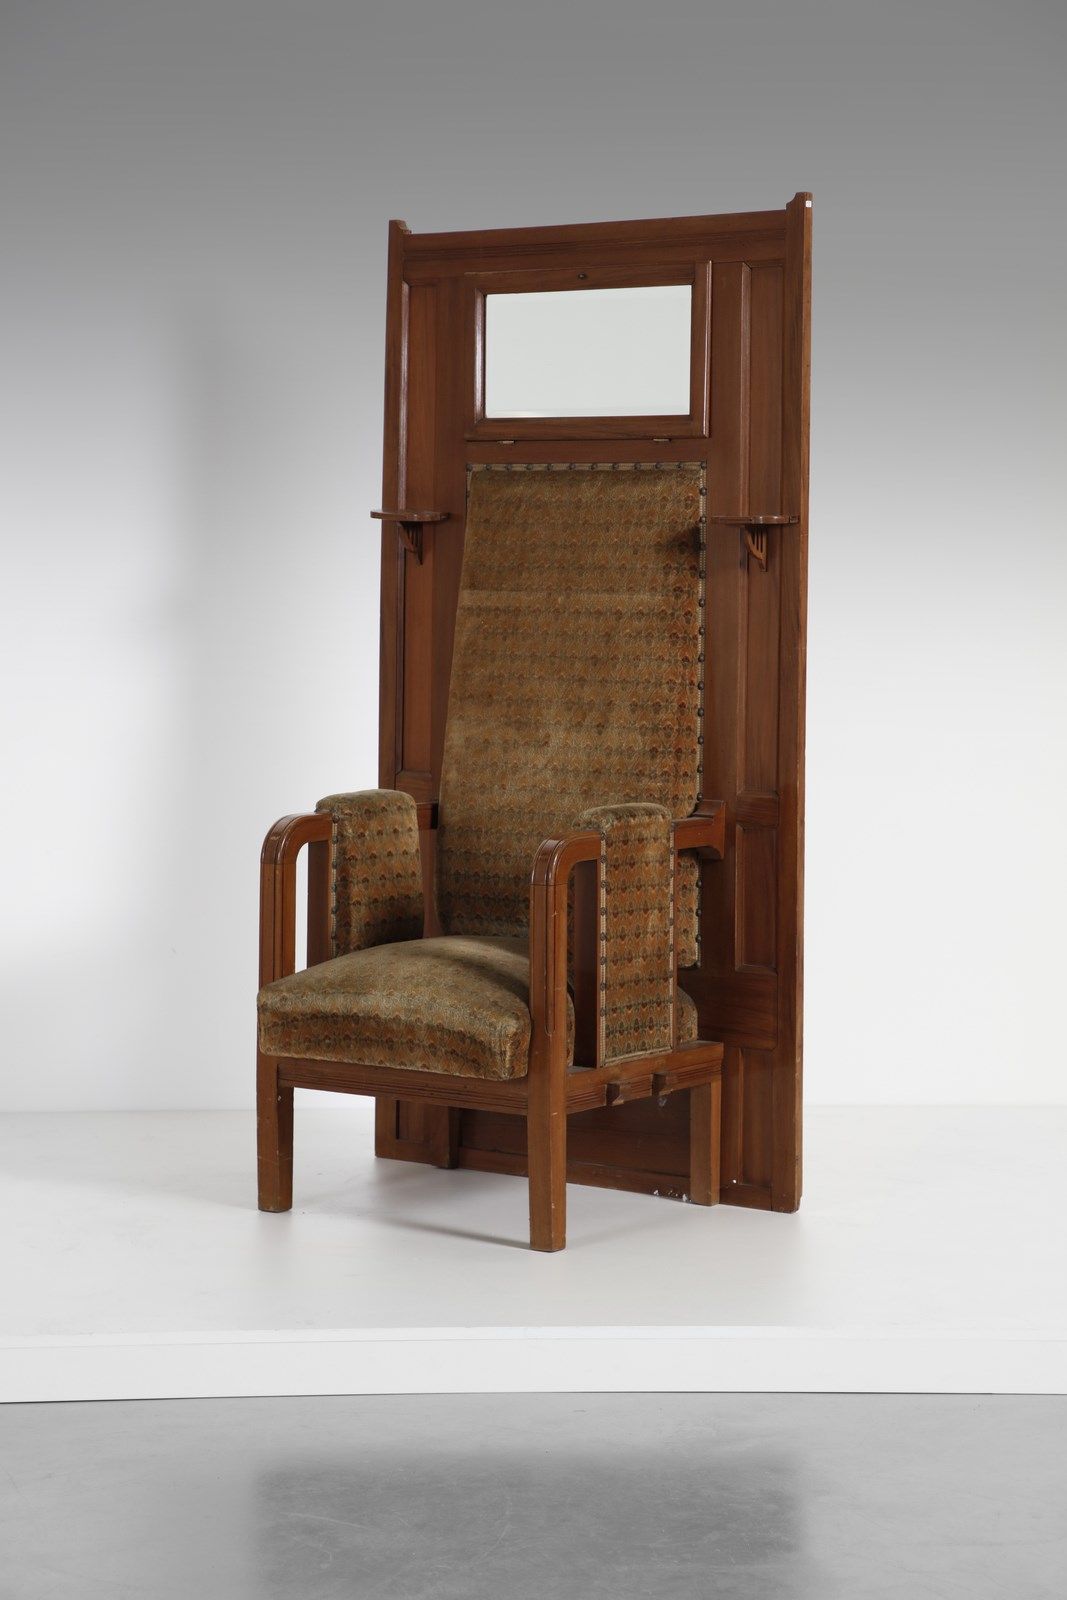 COMETTI GIACOMO (1863 - 1938) Throne, made by Atelier Cometti, Torino. Cherry an&hellip;